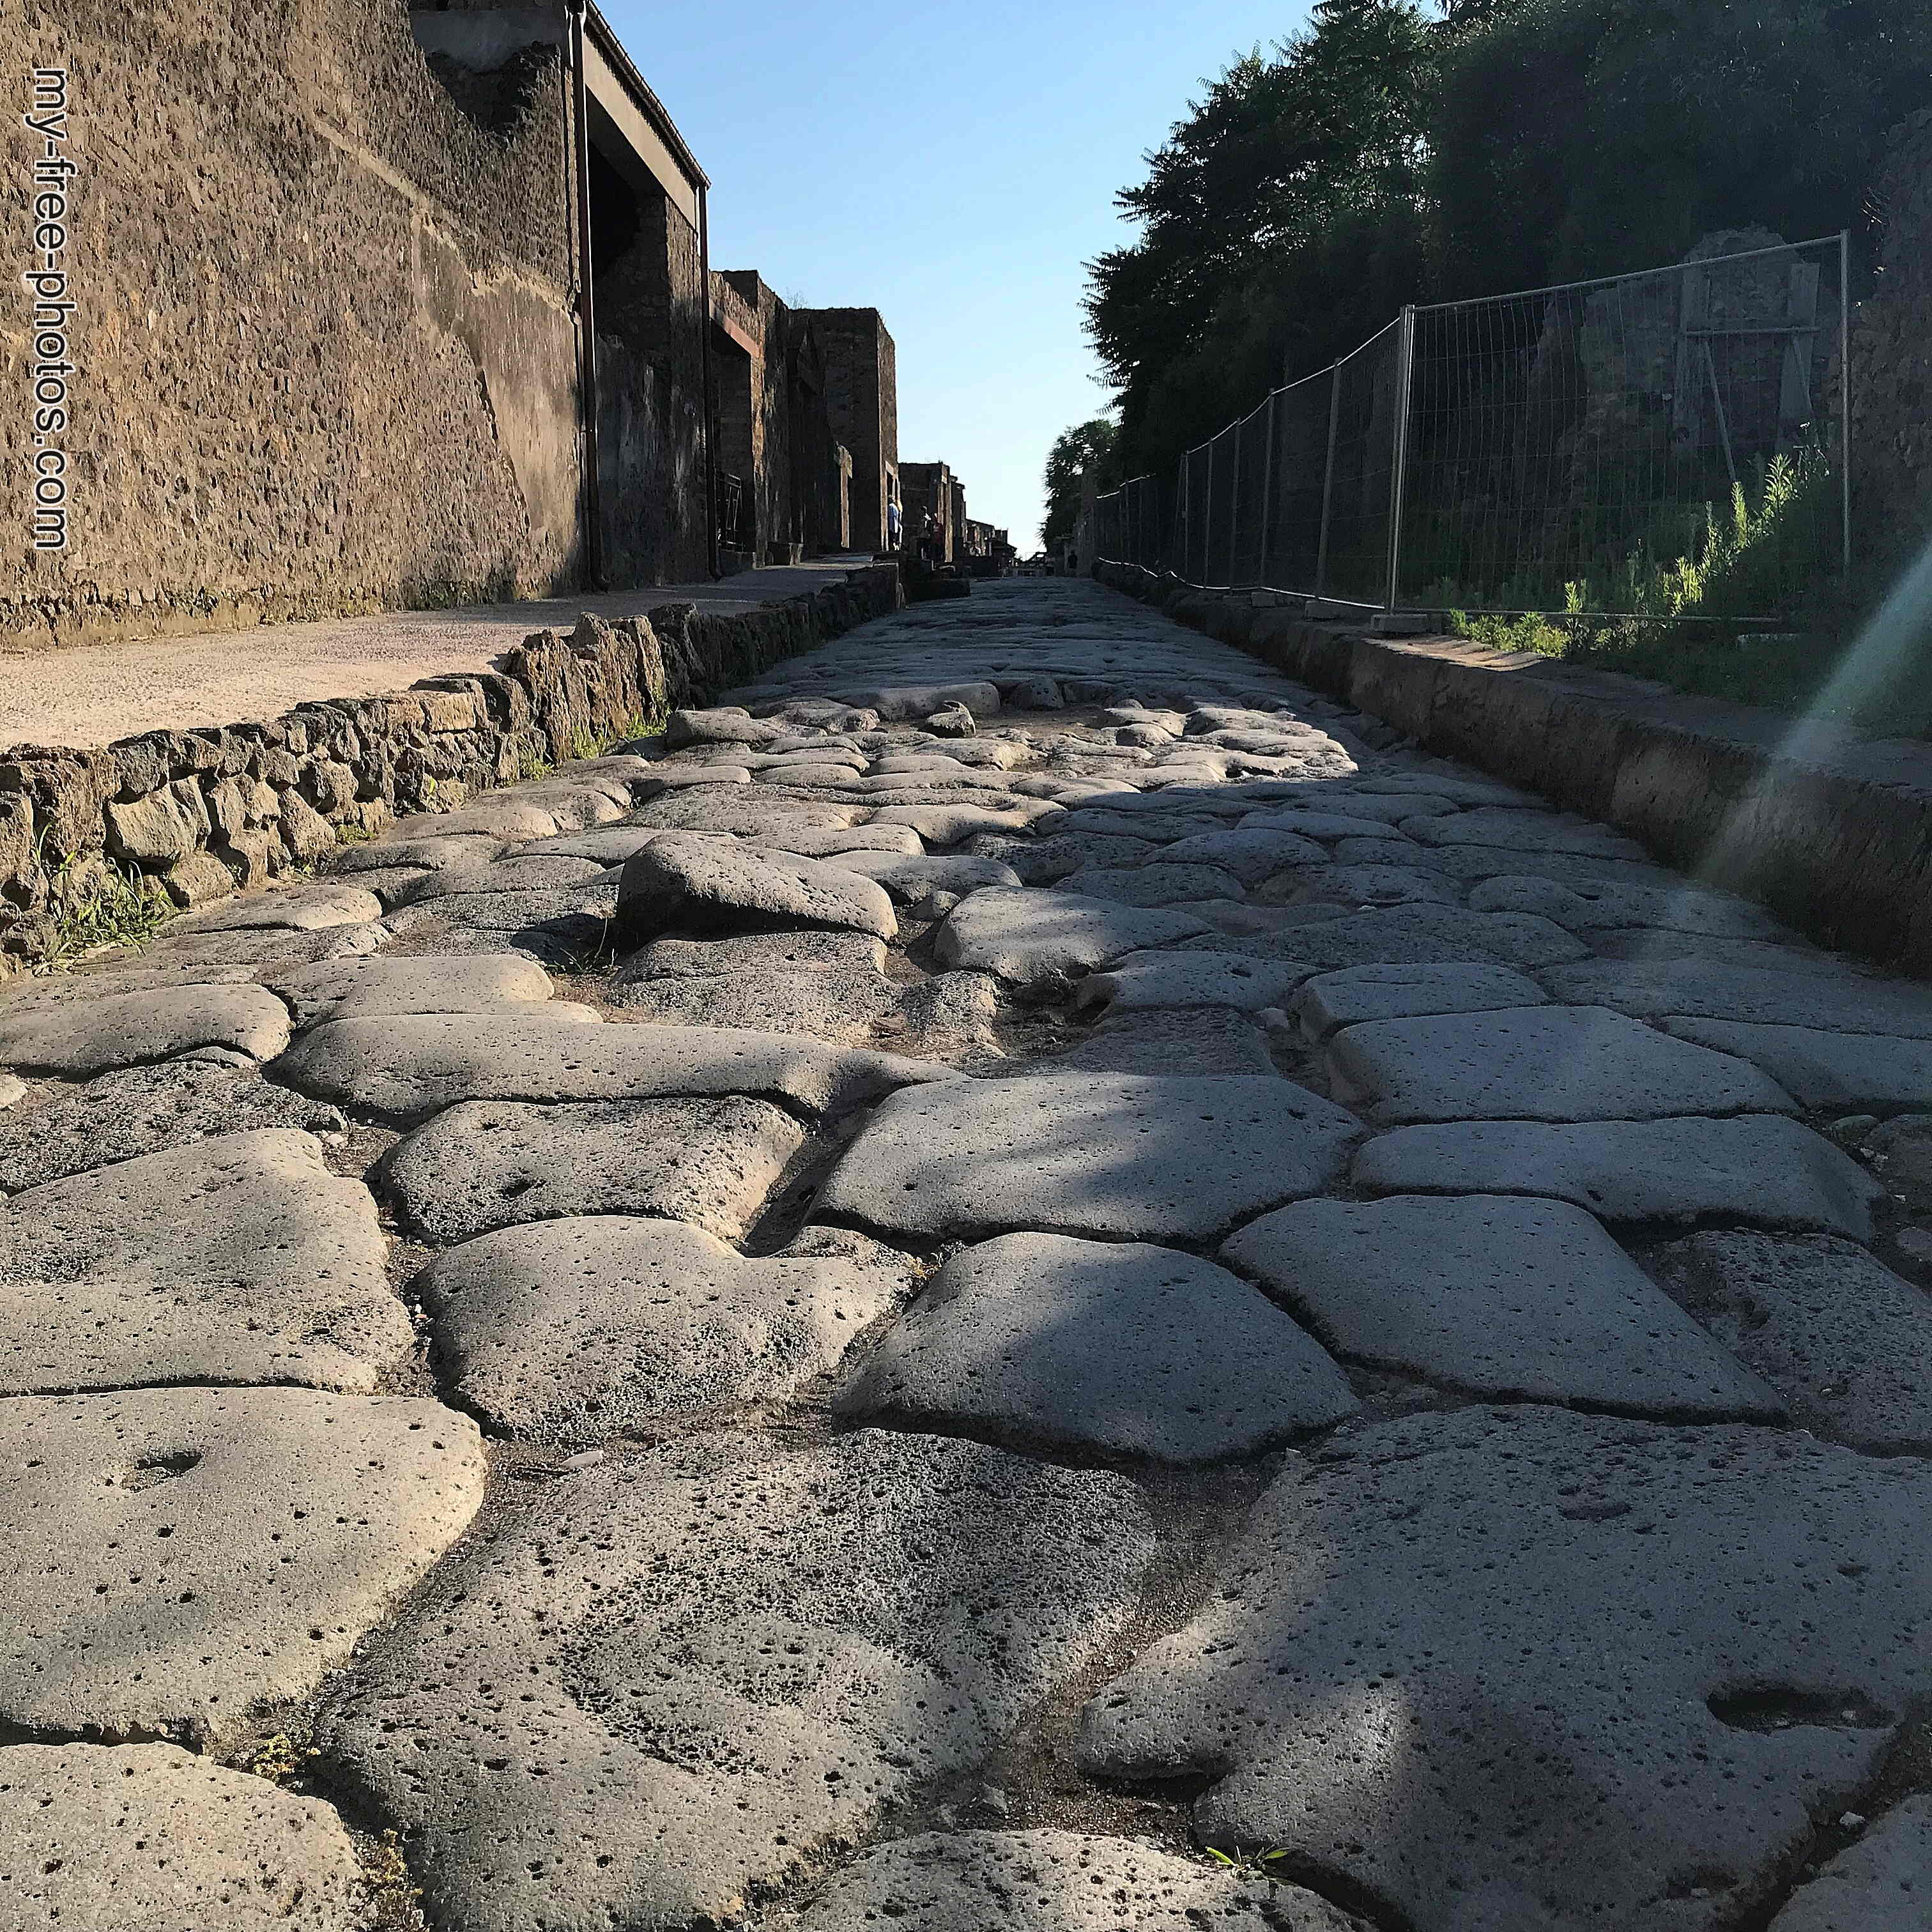 Pompeii  